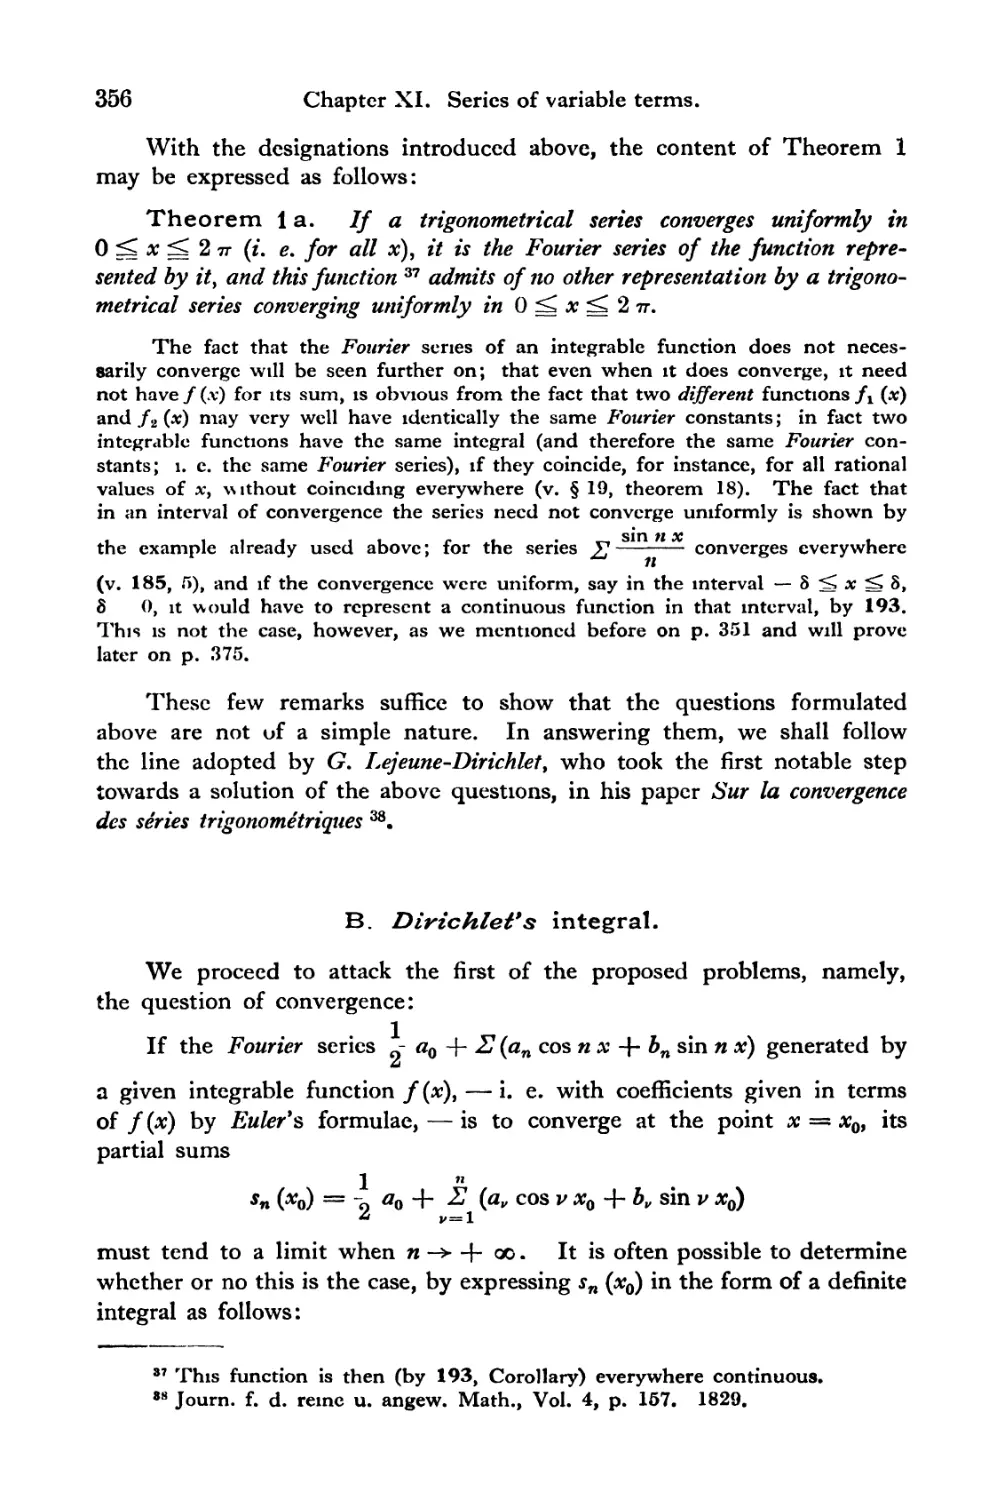 B. Dirichlet's integral